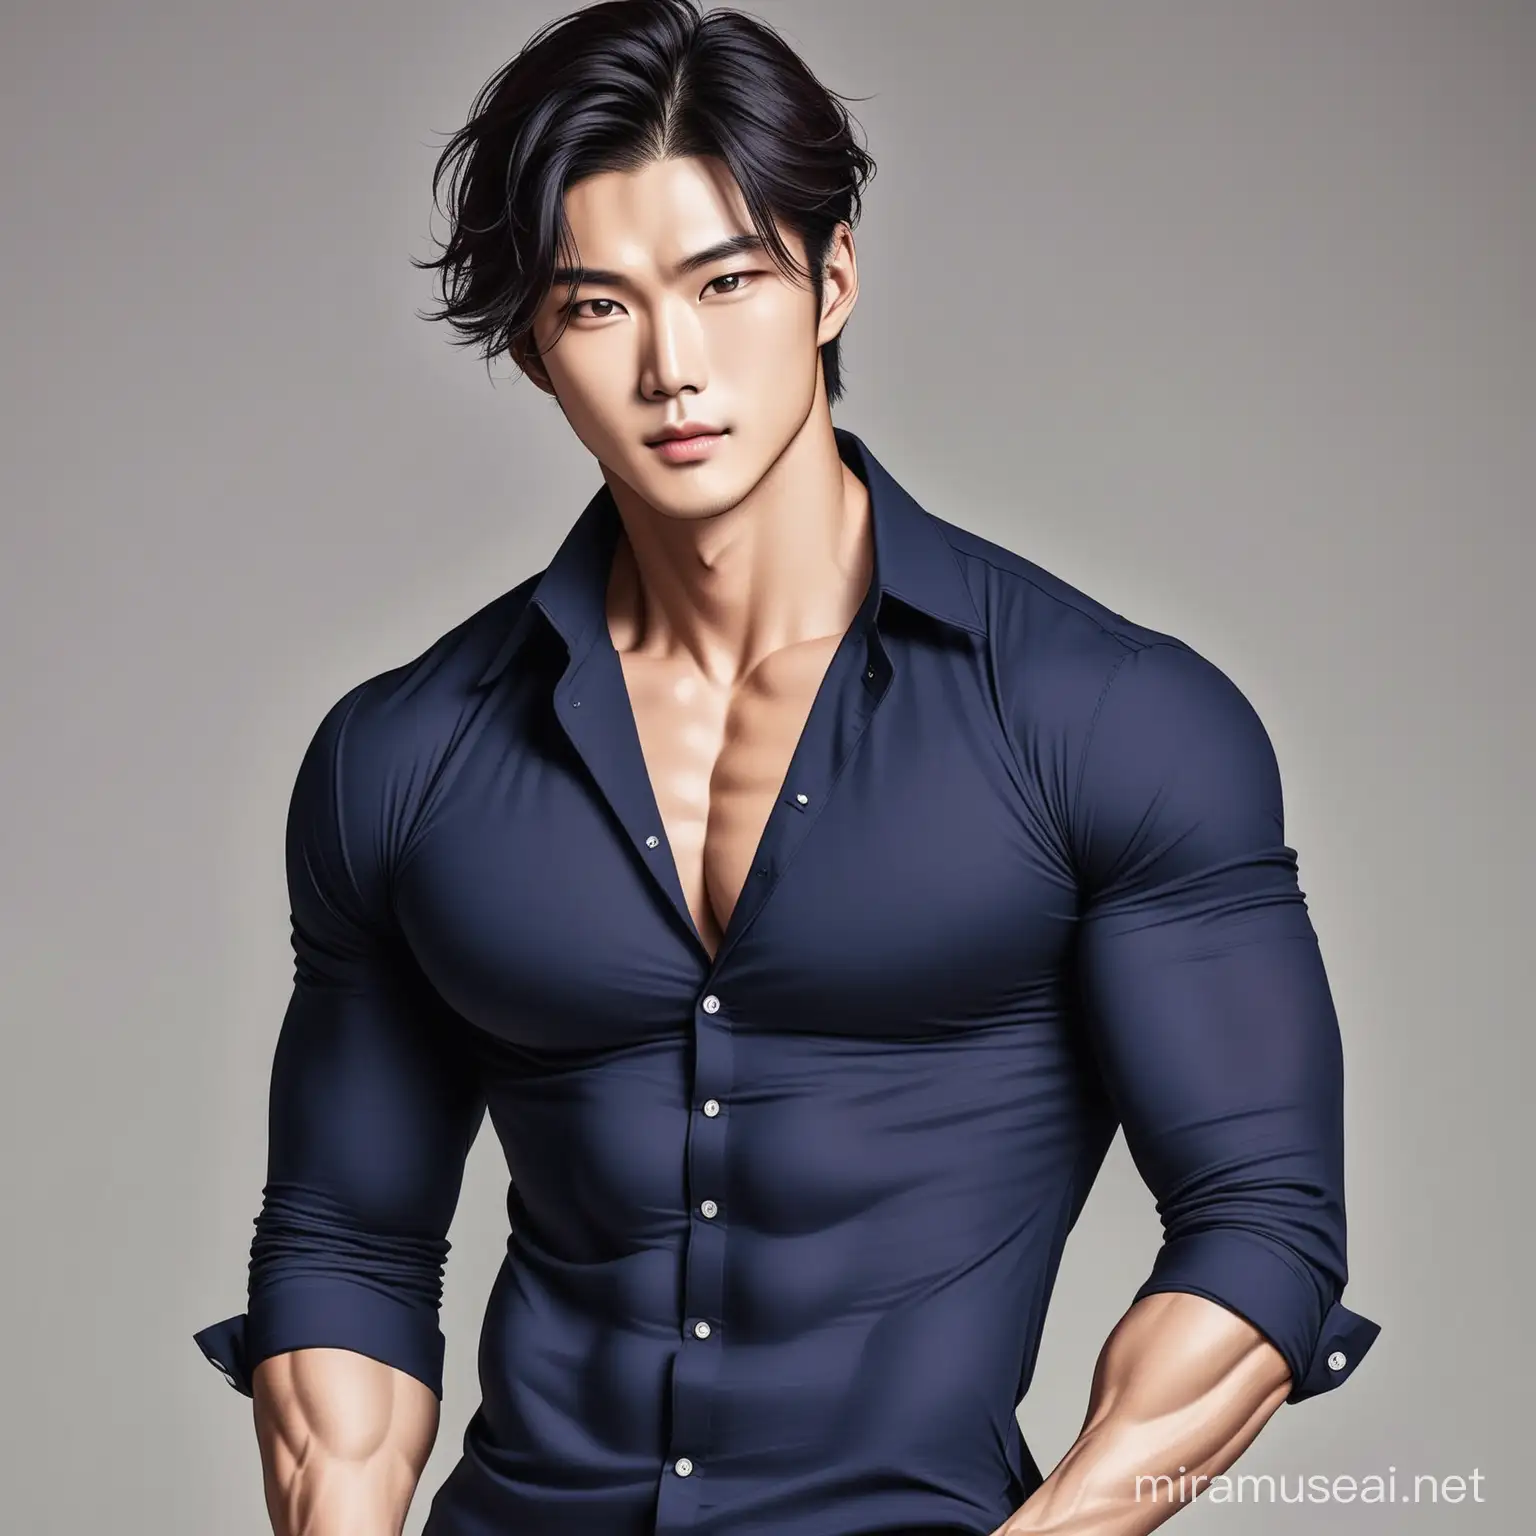 Handsome Korean man with muscles wearing a open collar dark navy long sleeved shirt